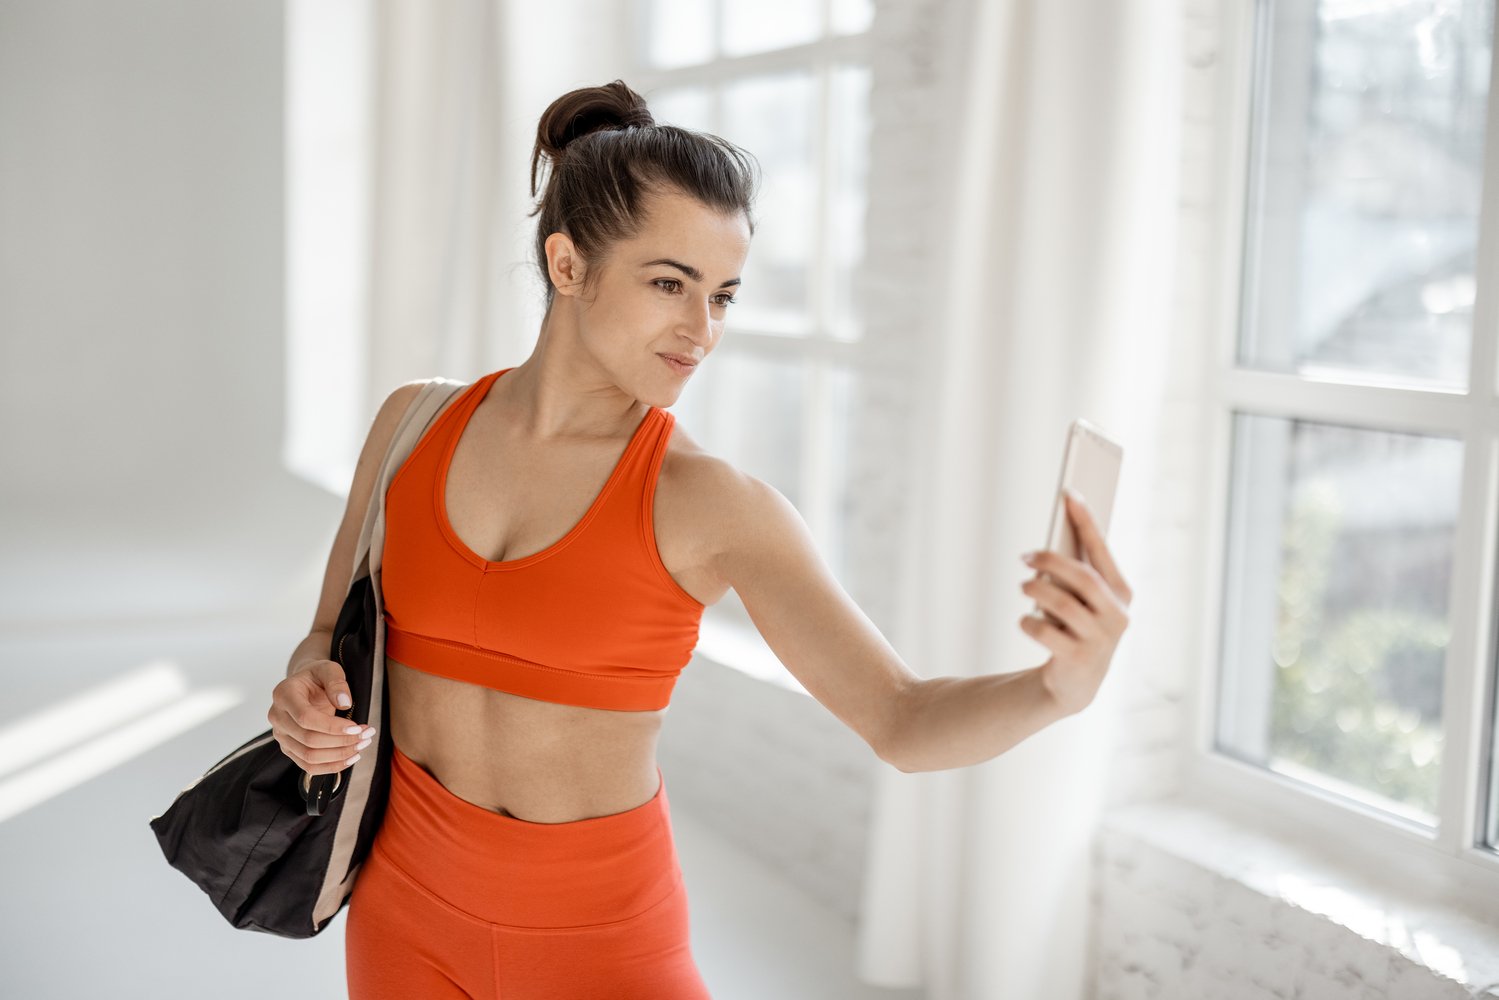 sports-woman-making-selfie-photo-at-gym-2022-01-18-23-33-59-utc